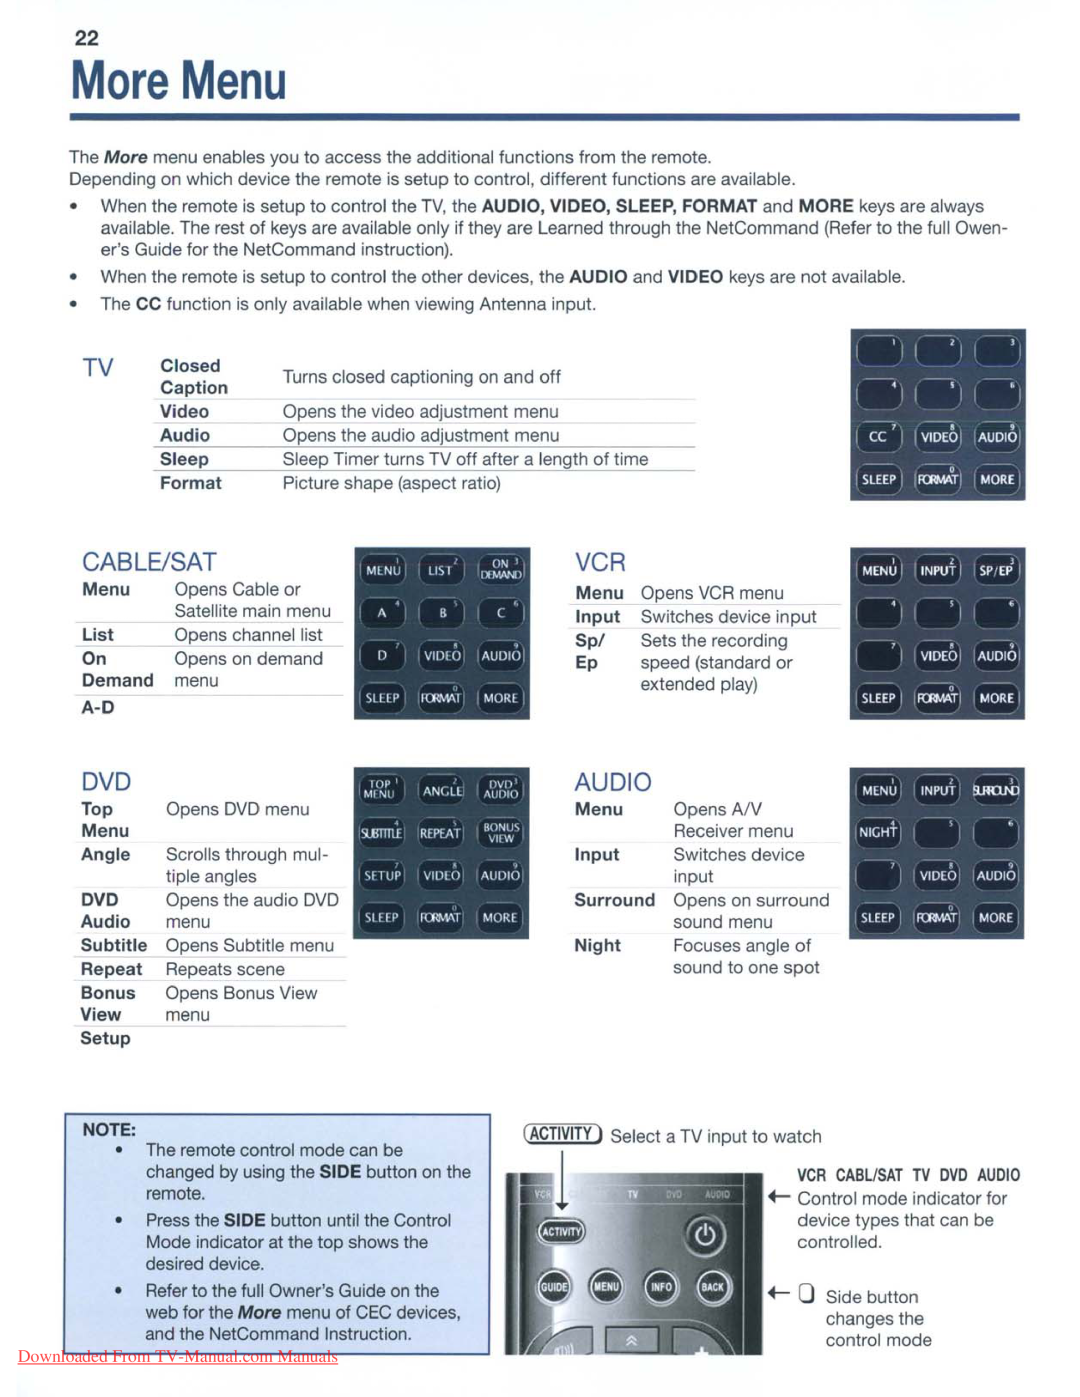 Mitsubishi Electronics 153, 249, 151 manual More Menu, Cable/Sat, Audio, Downloaded From TV-Manual.com Manuals 